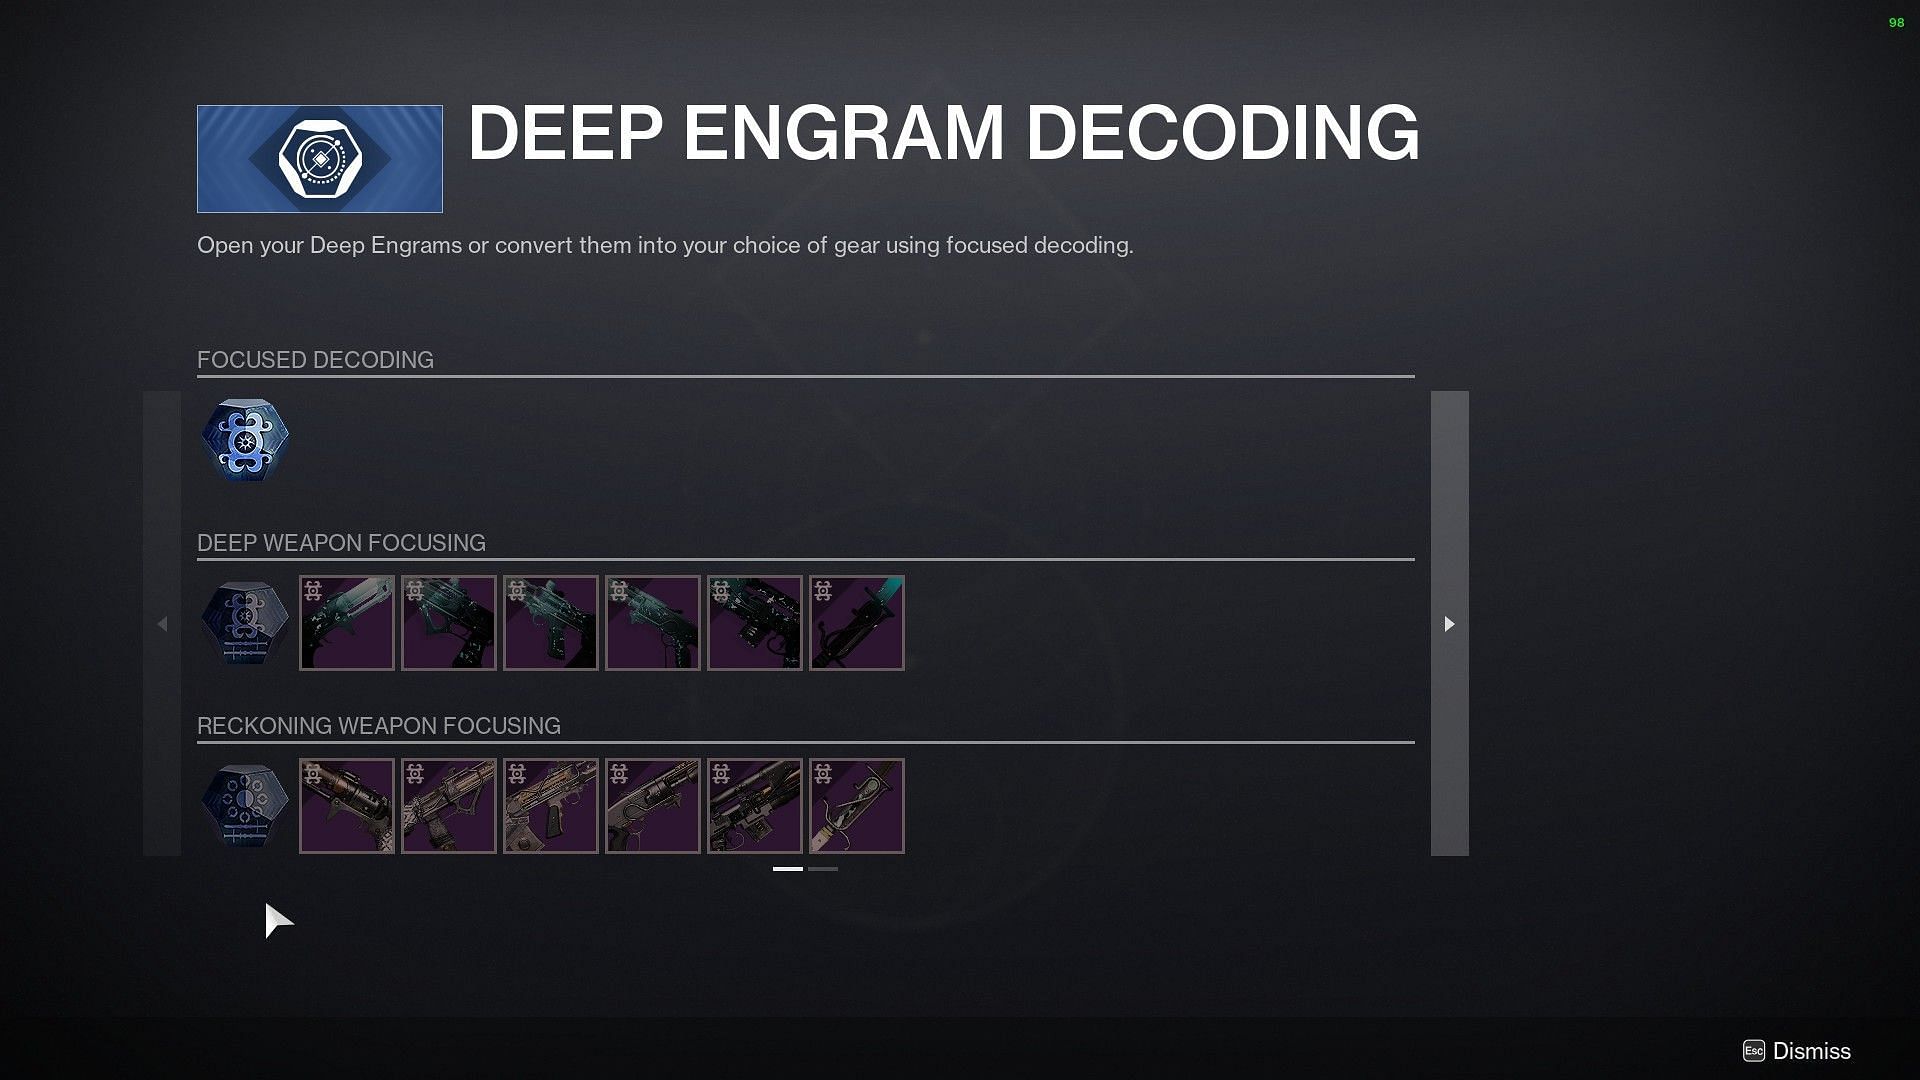 Destiny 2 Reckoning weapon focusing (Image via Bungie)